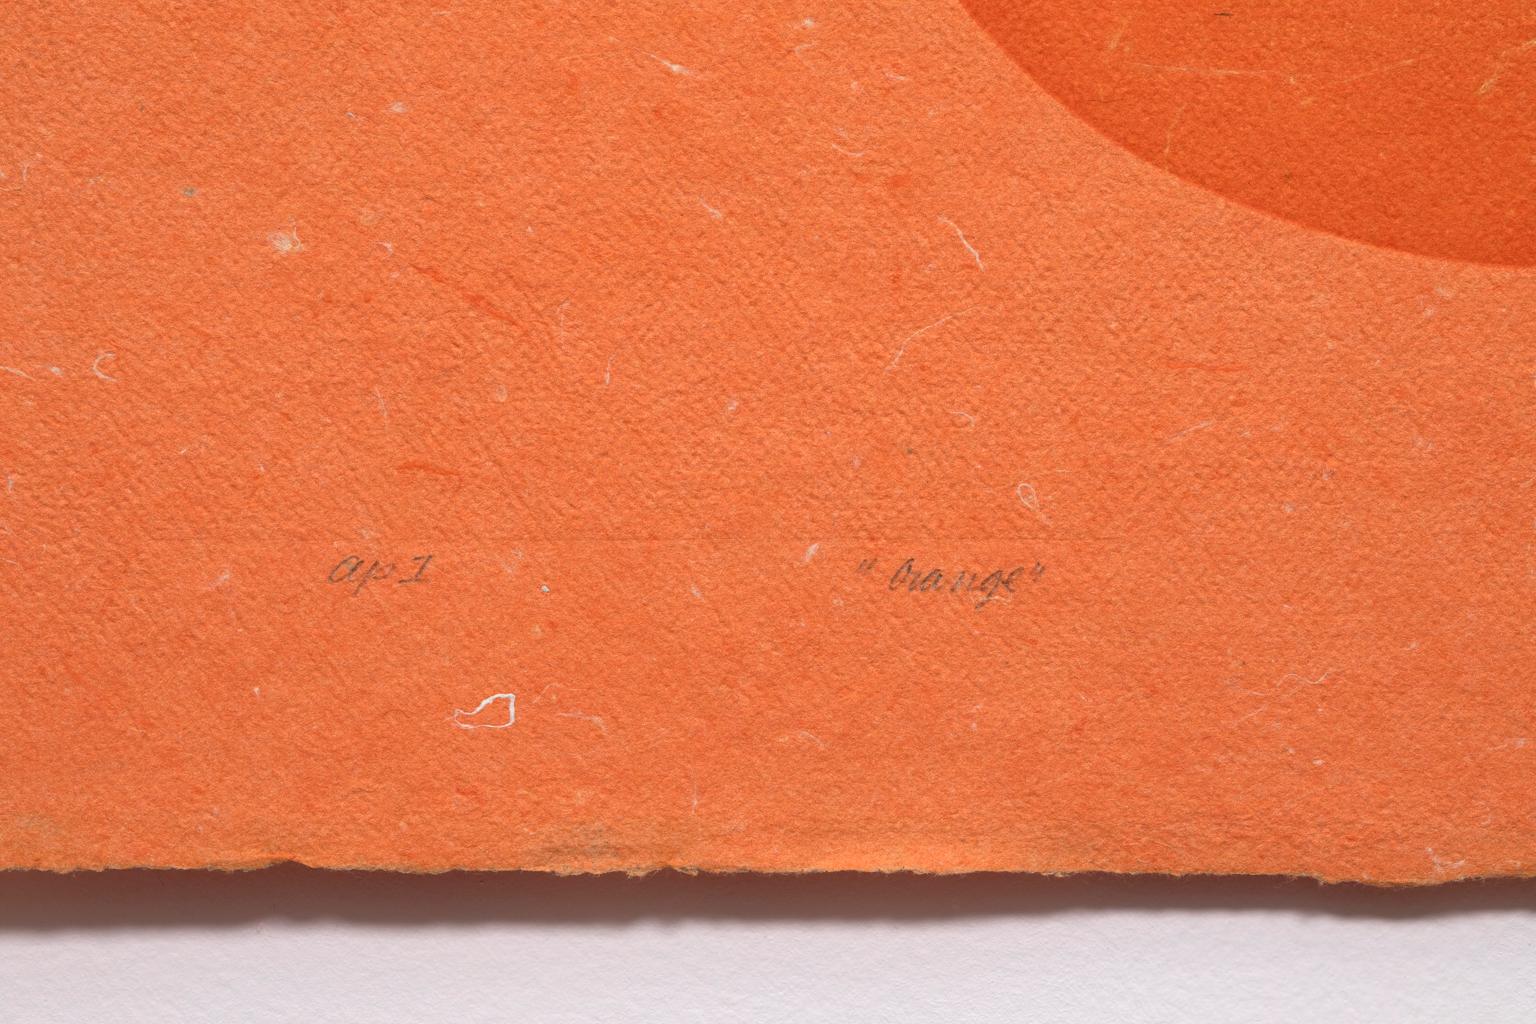 Joyce T. Nagel Druck „Orange“ AP 1 Künstler Proof Handgefertigtes Papier Signiert datiert, datiert im Angebot 1